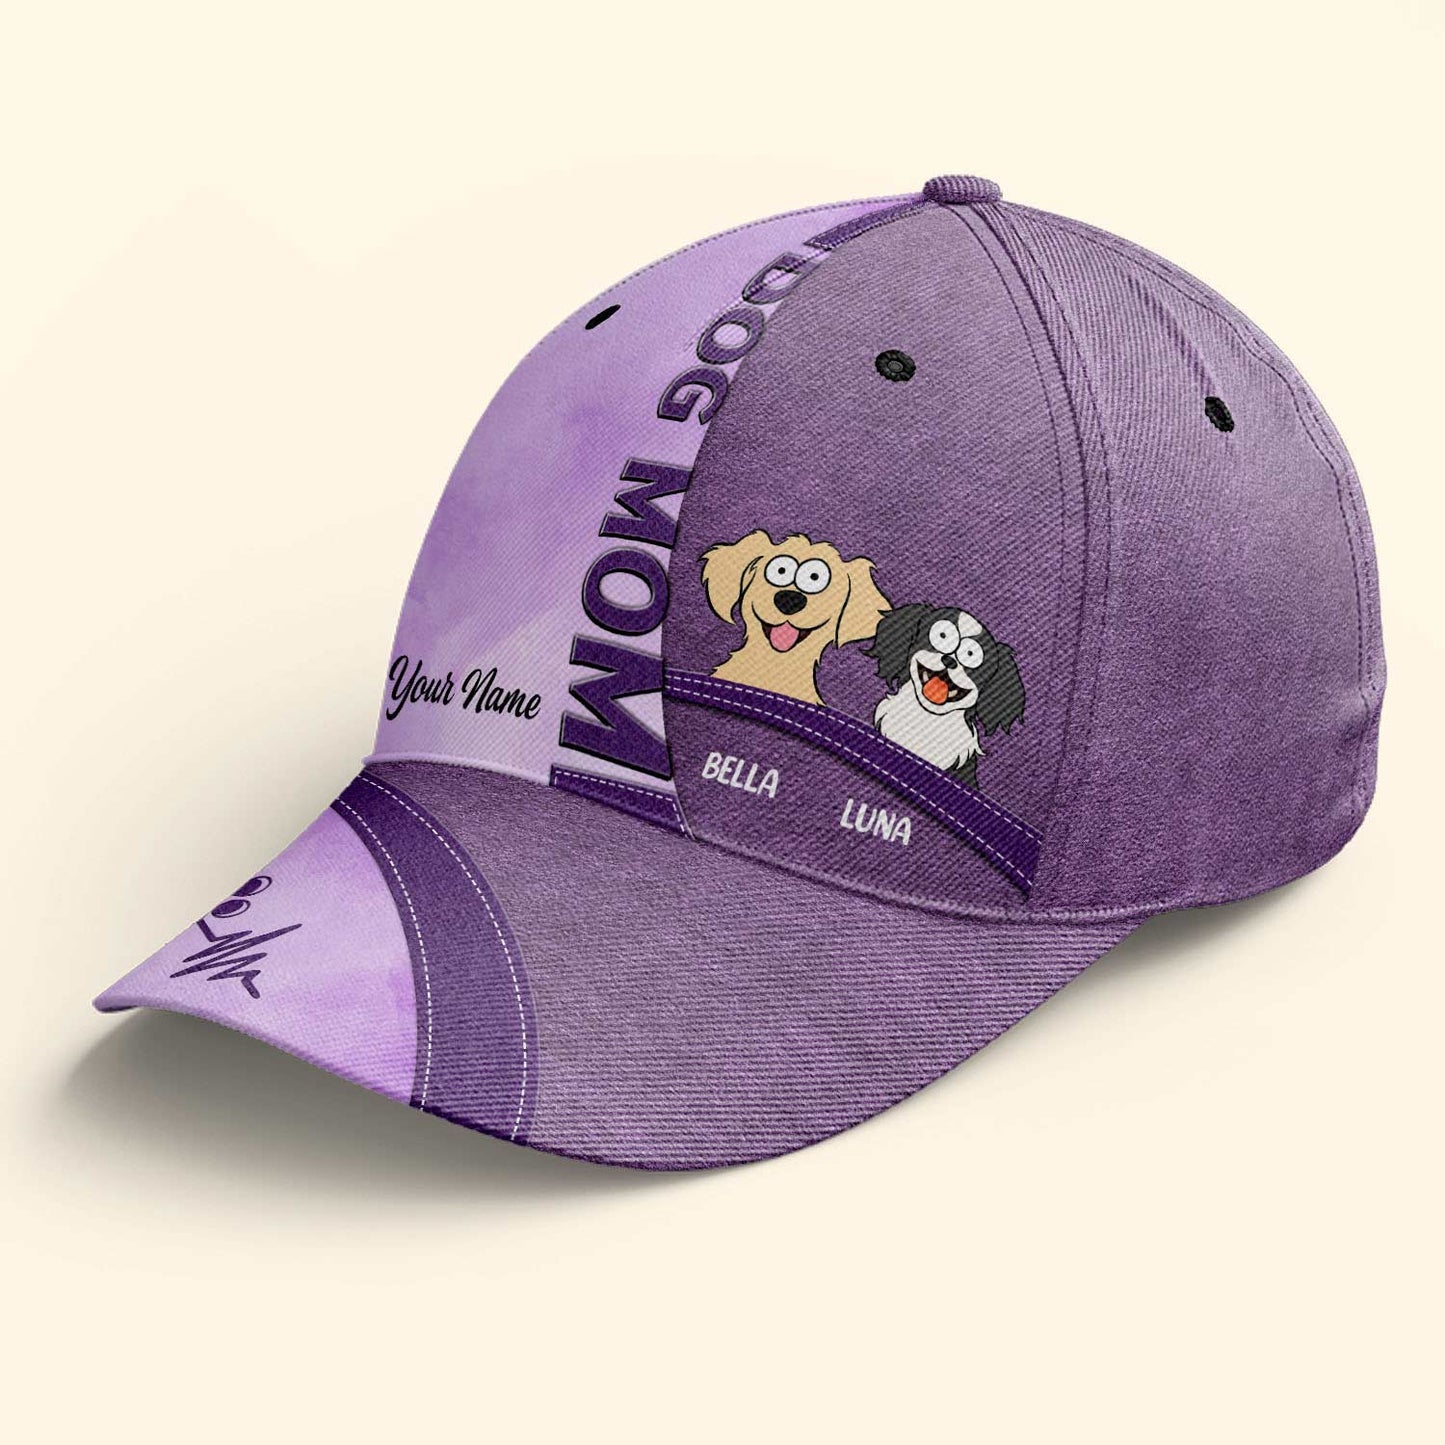 Dog Mom Dog Dad  - Personalized Classic Cap